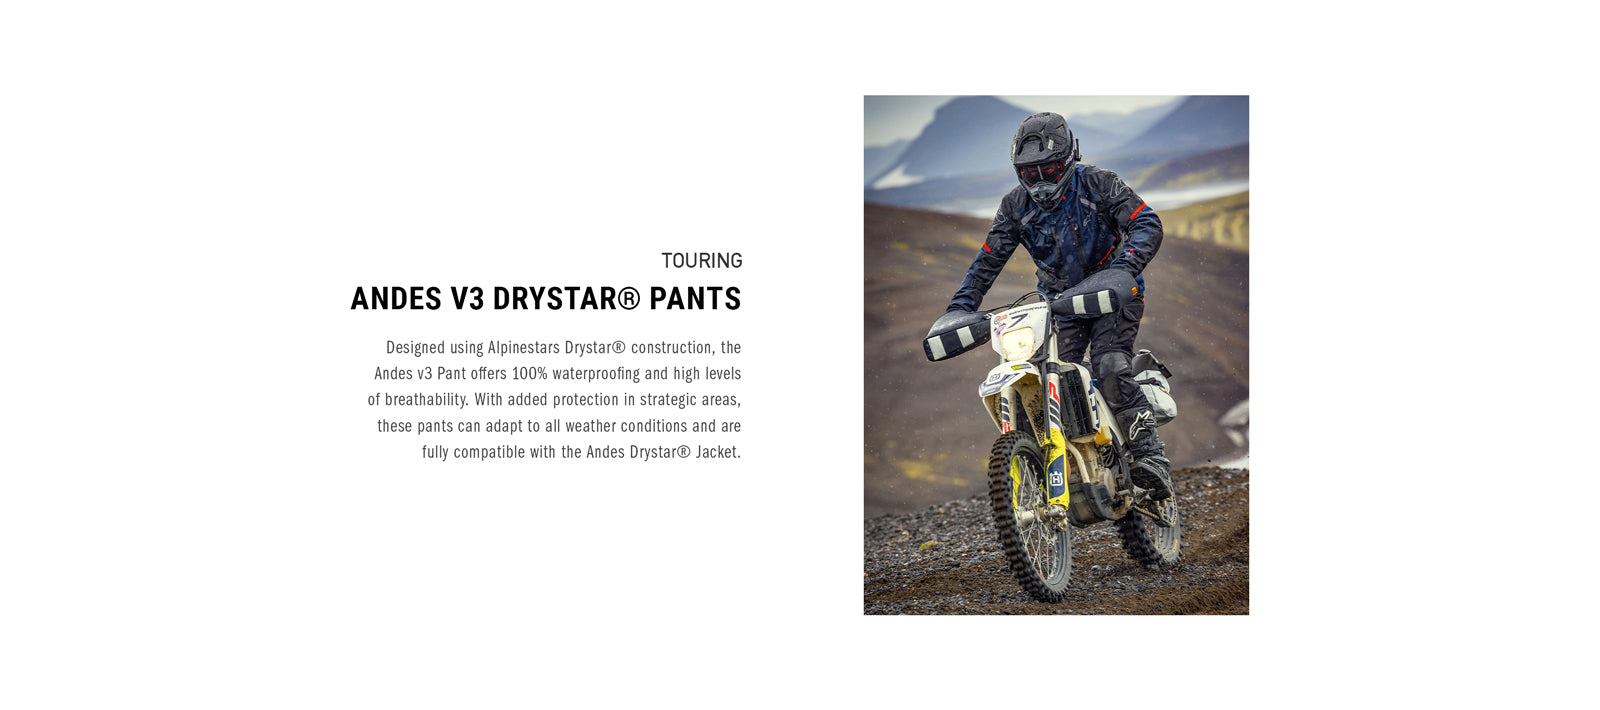 Andes V3 Drystar<sup>®</sup> Pants